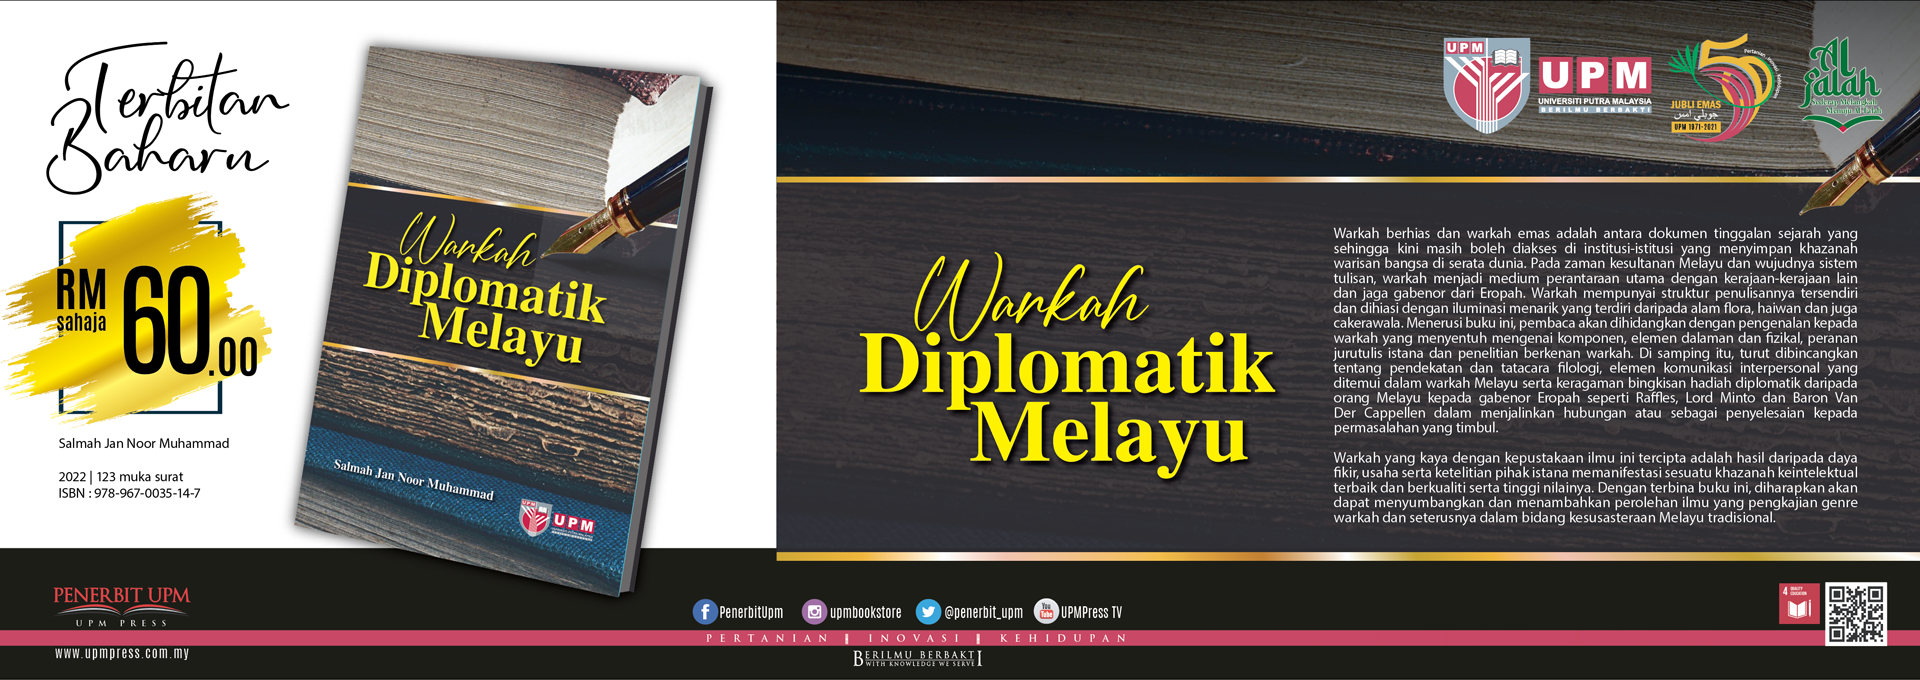 New Publication9_Warkah Diplomatik Melayu